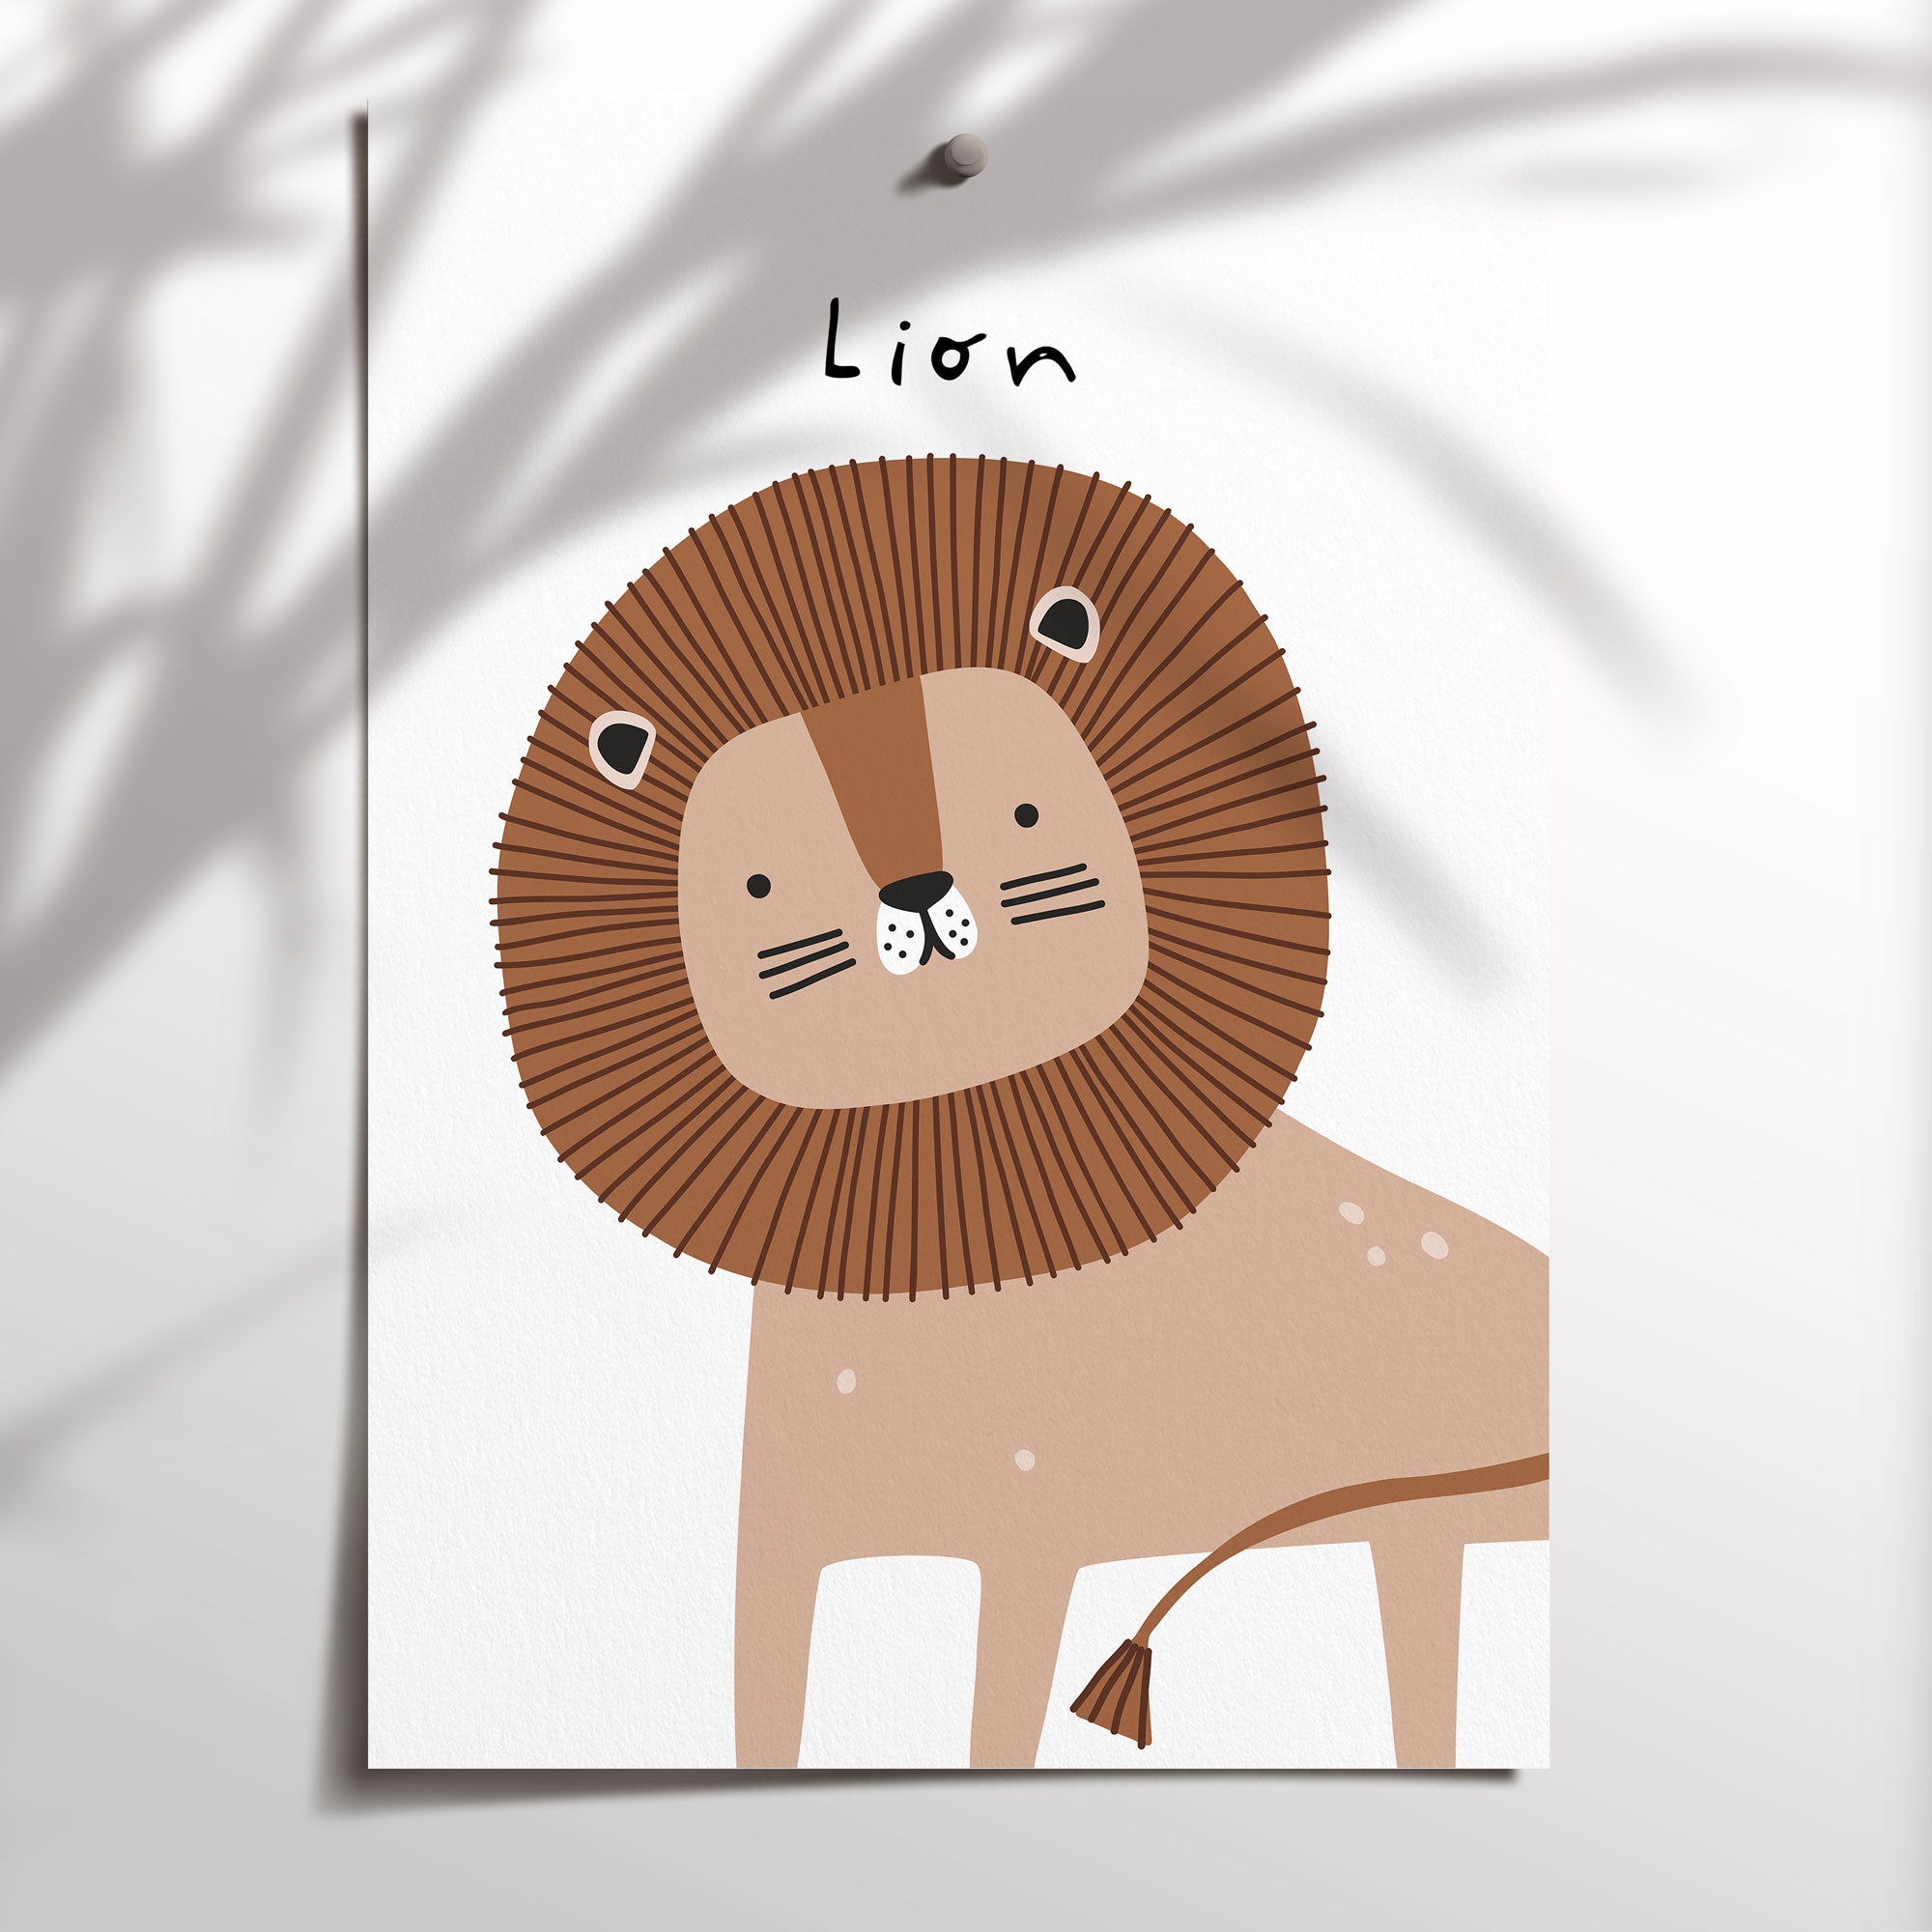 Zebra, Lion & Jaguar Prints